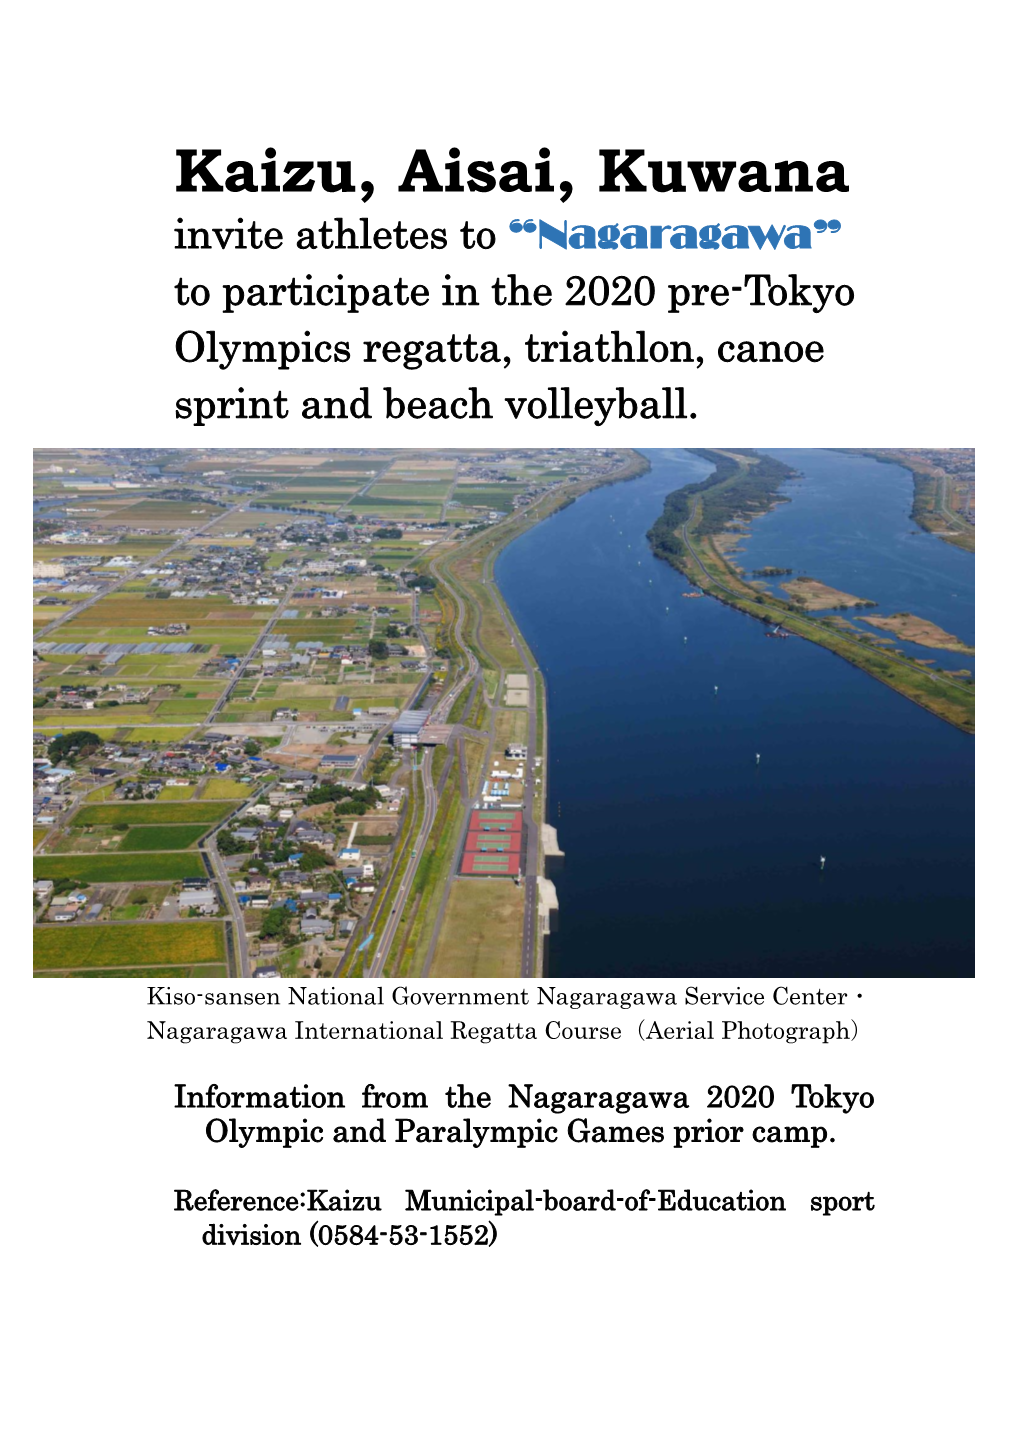 Kaizu, Aisai, Kuwana Invite Athletes to “Nagaragawa” to Participate in the 2020 Pre-Tokyo Olympics Regatta, Triathlon, Canoe Sprint and Beach Volleyball